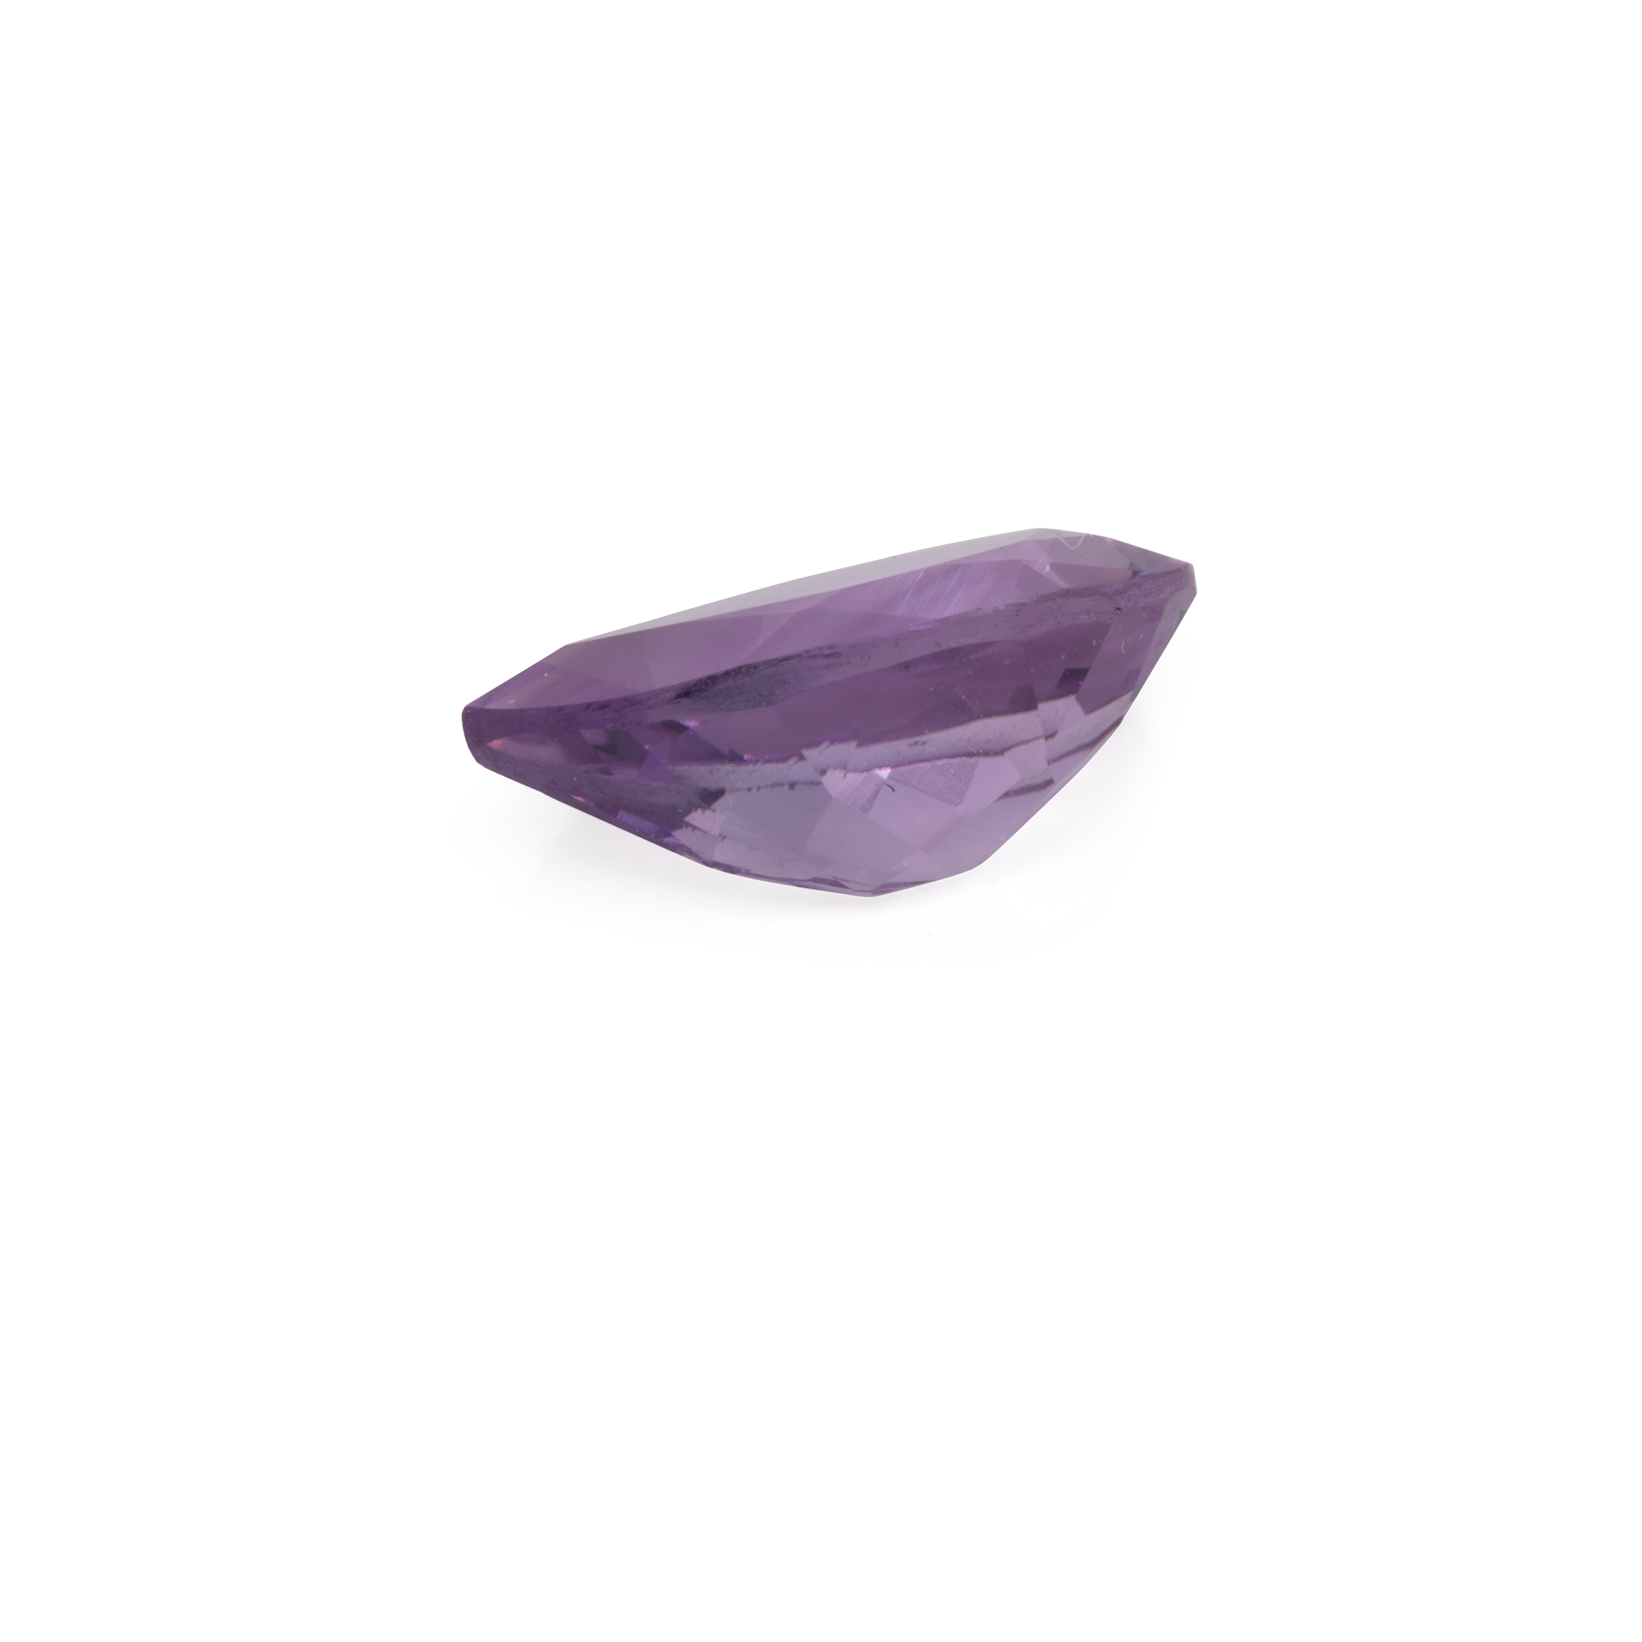 Amethyst - purple, pearshape, 9x6 mm, 1.00-1.20 cts, No. AMY63001